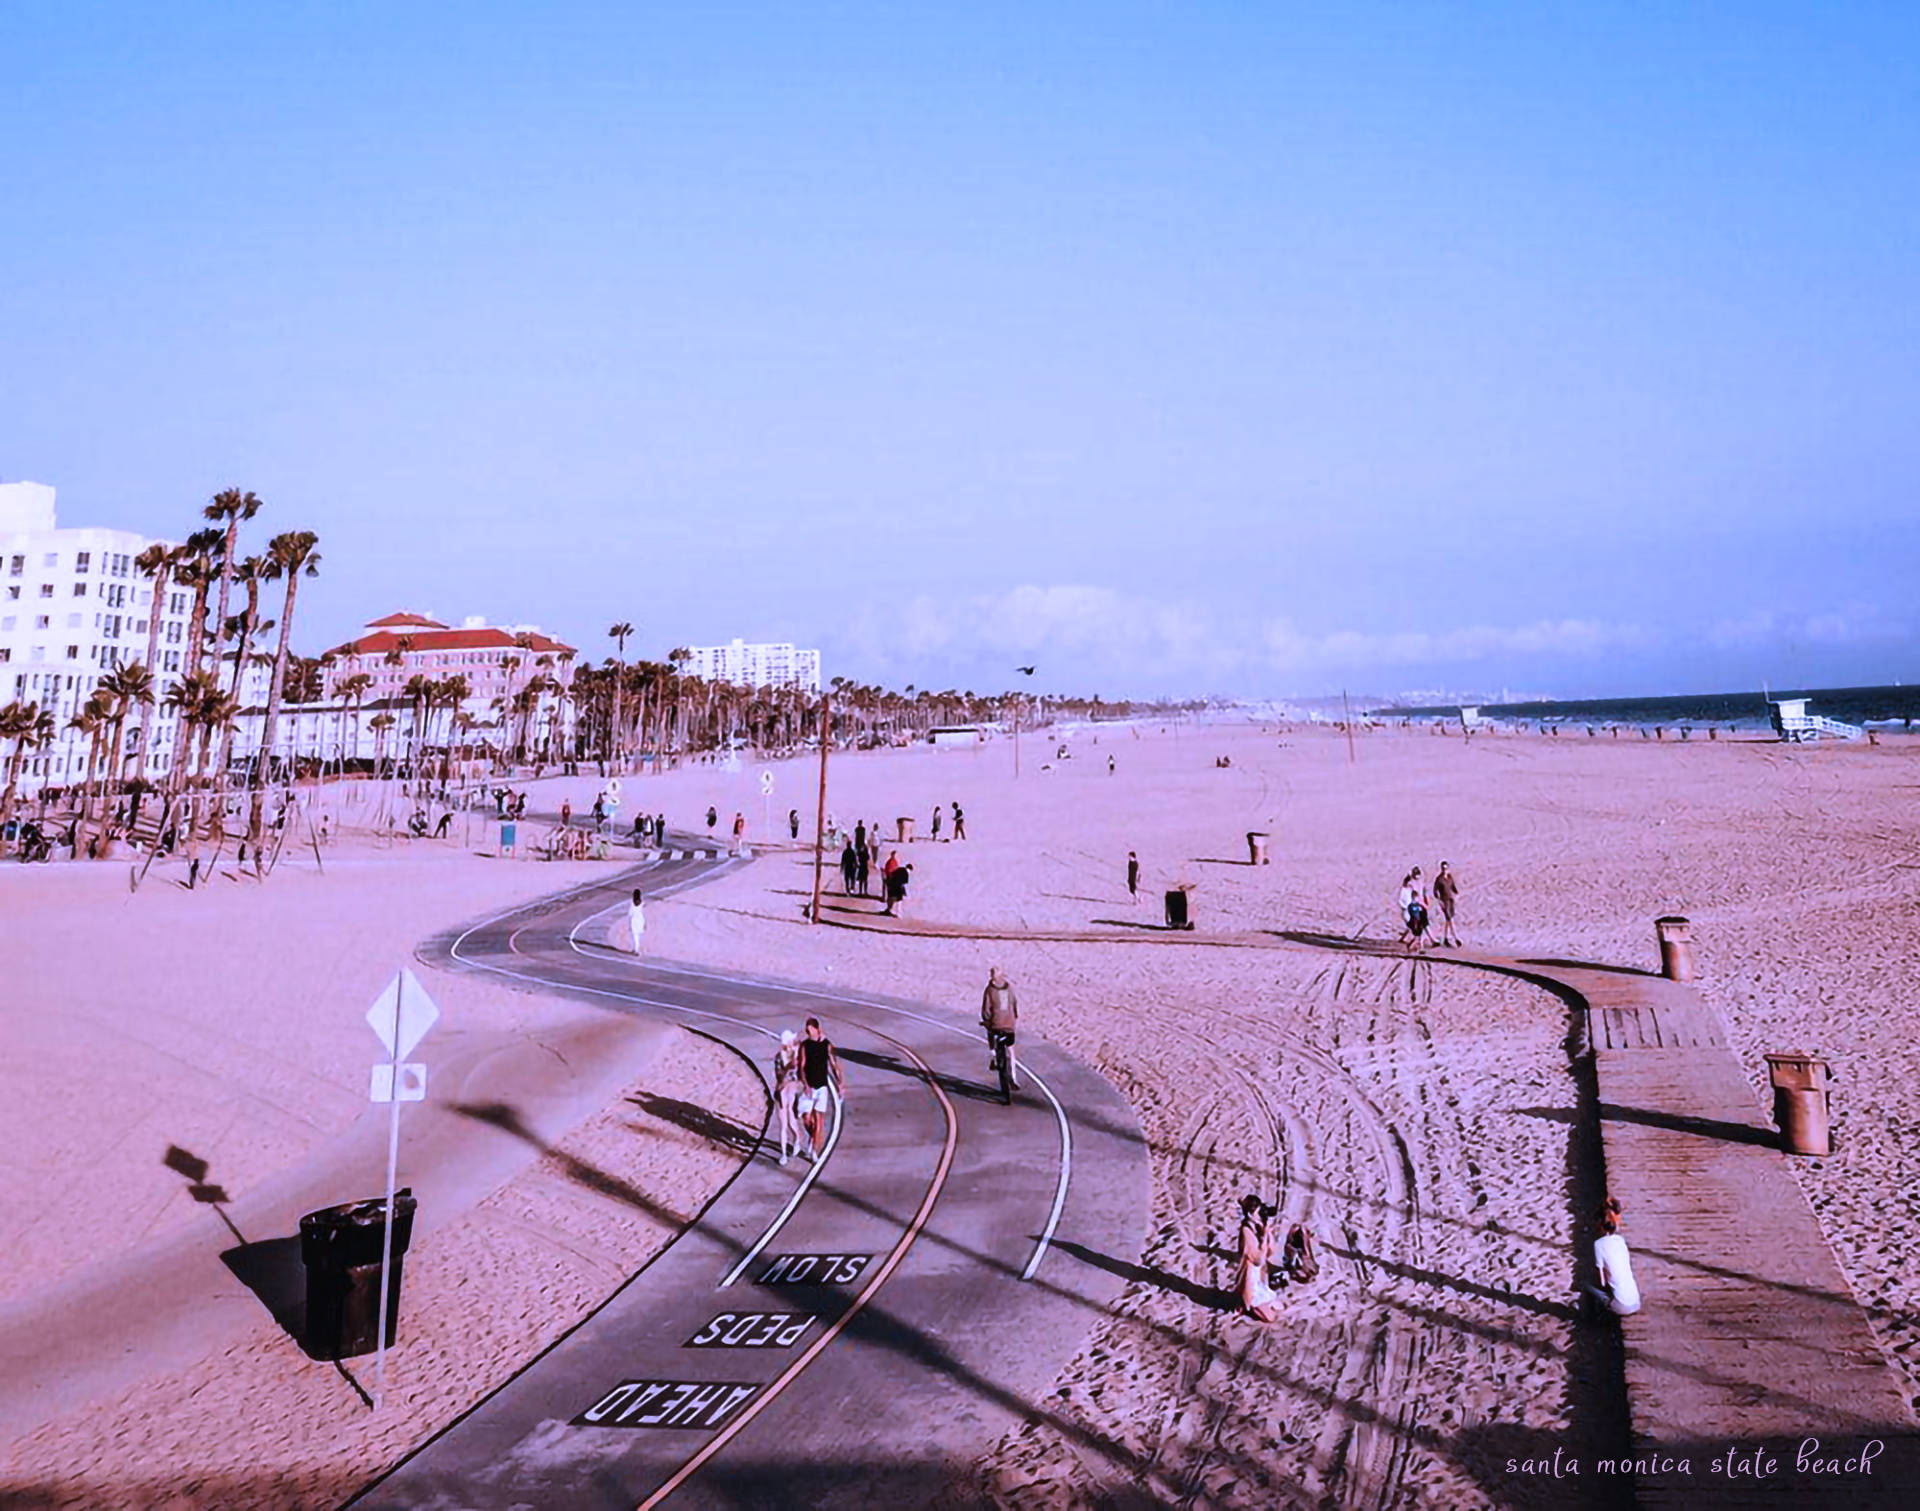 Caption: Serene View of Santa Monica State Beach Wallpaper